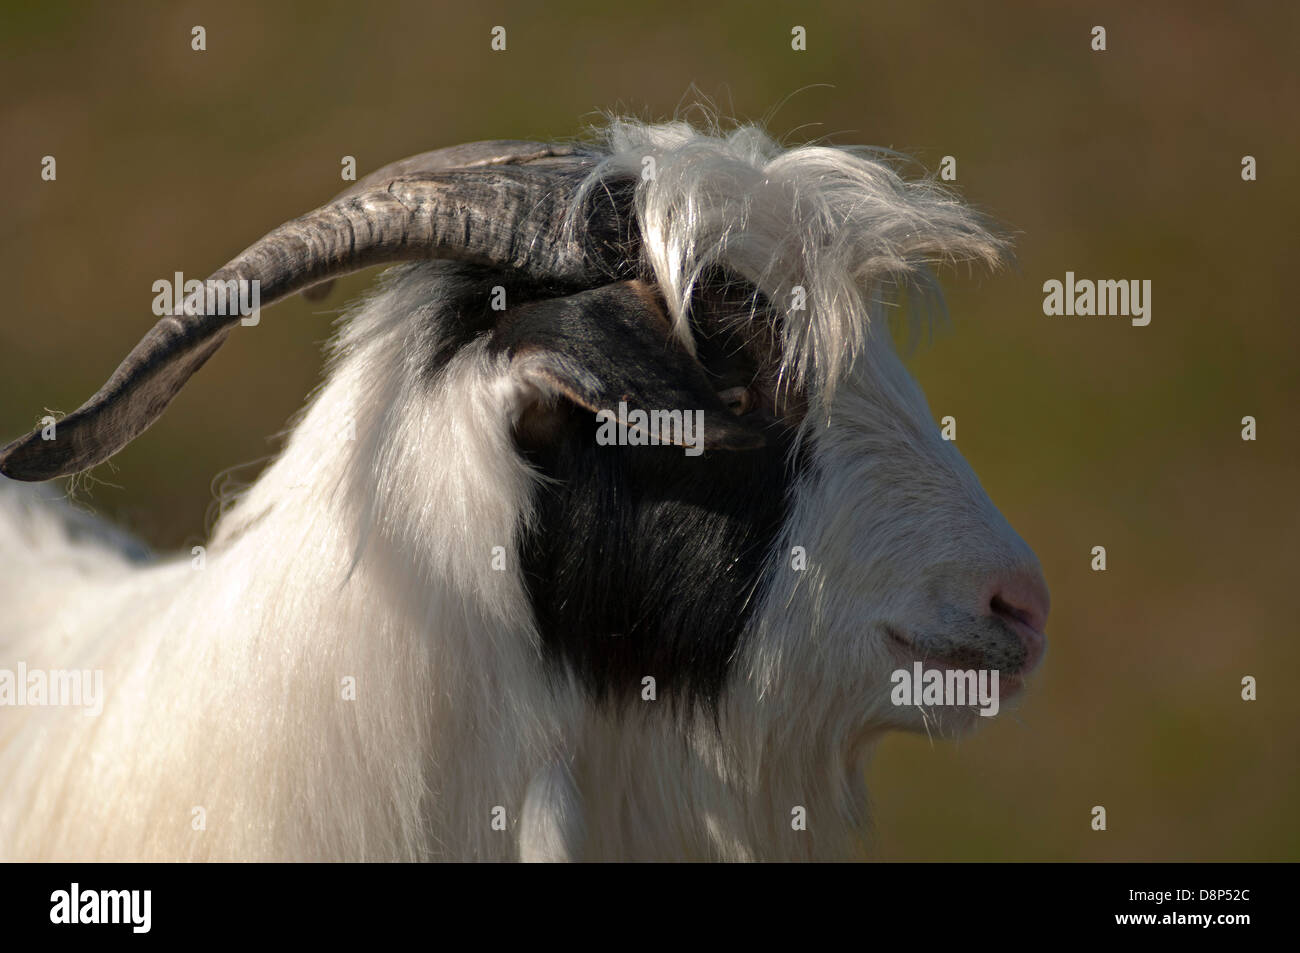 Portrait of a goat in profile Stock Photo